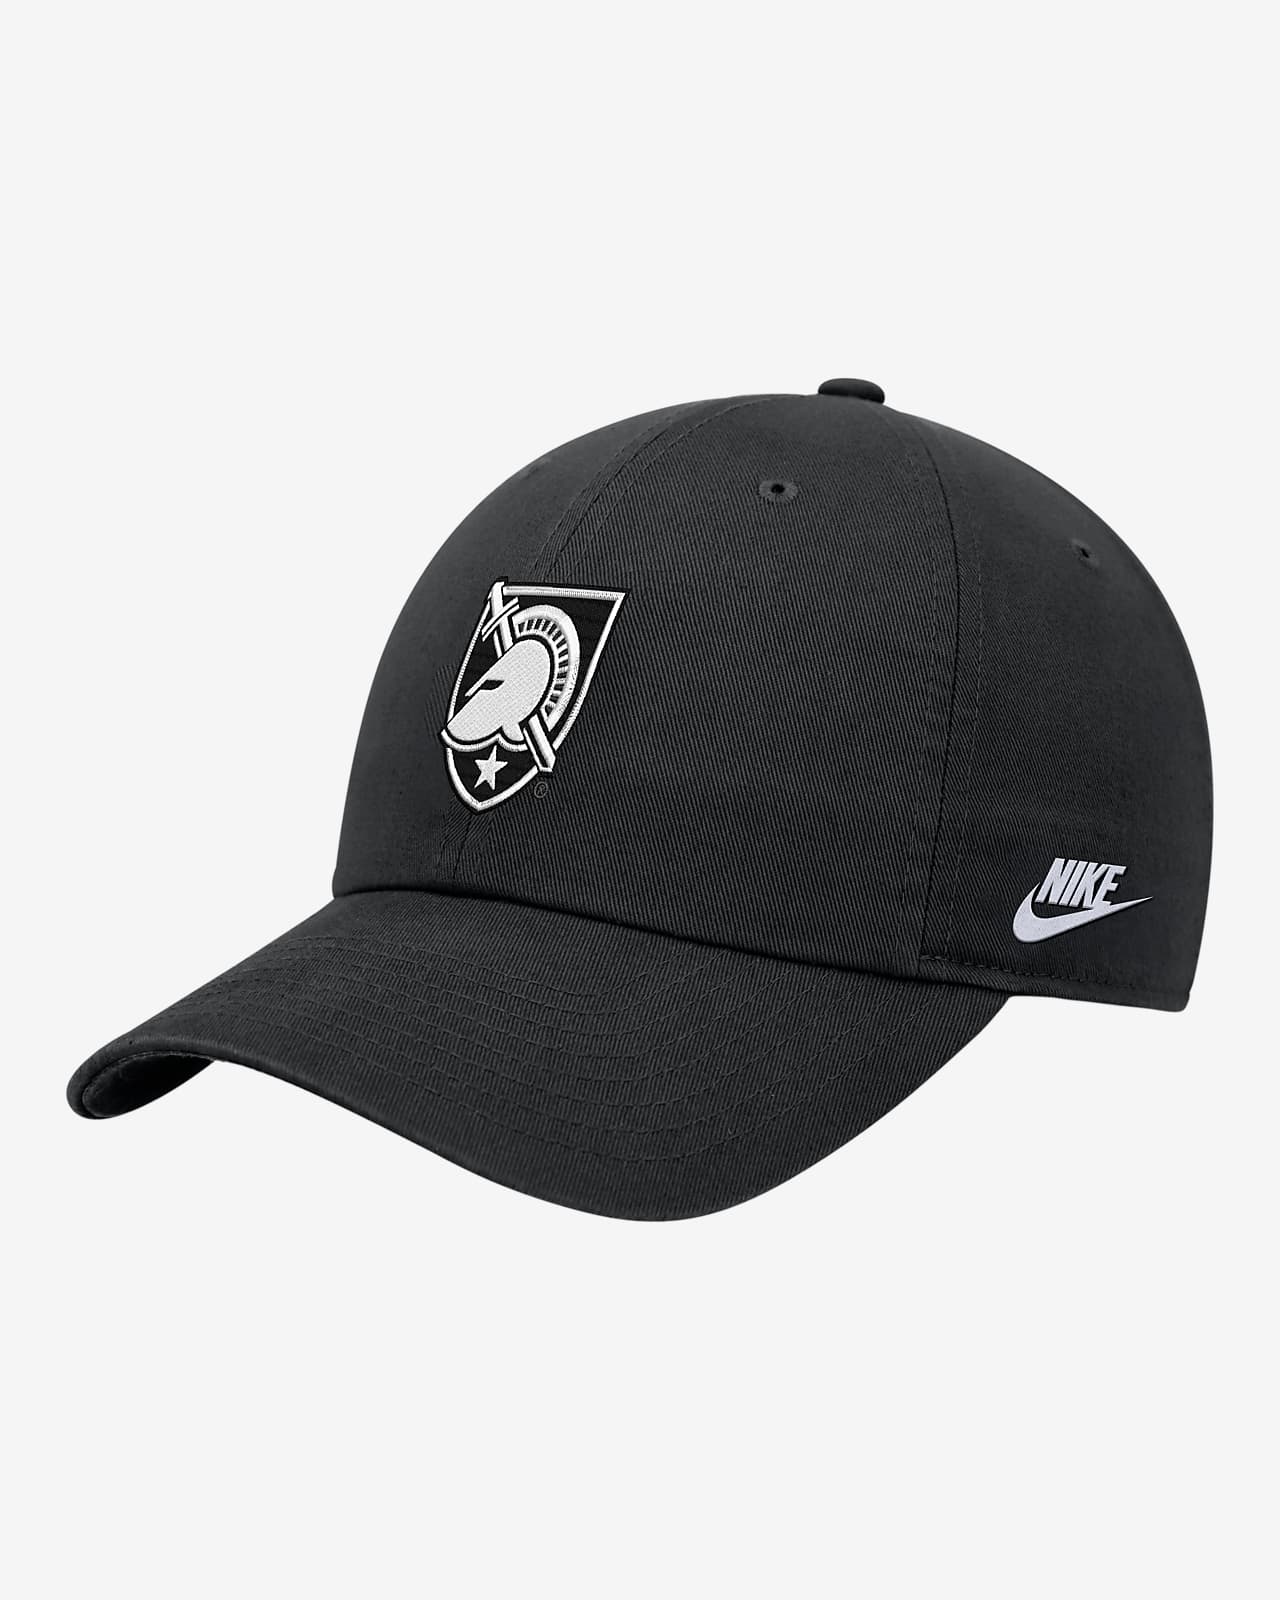 Army Nike College Cap